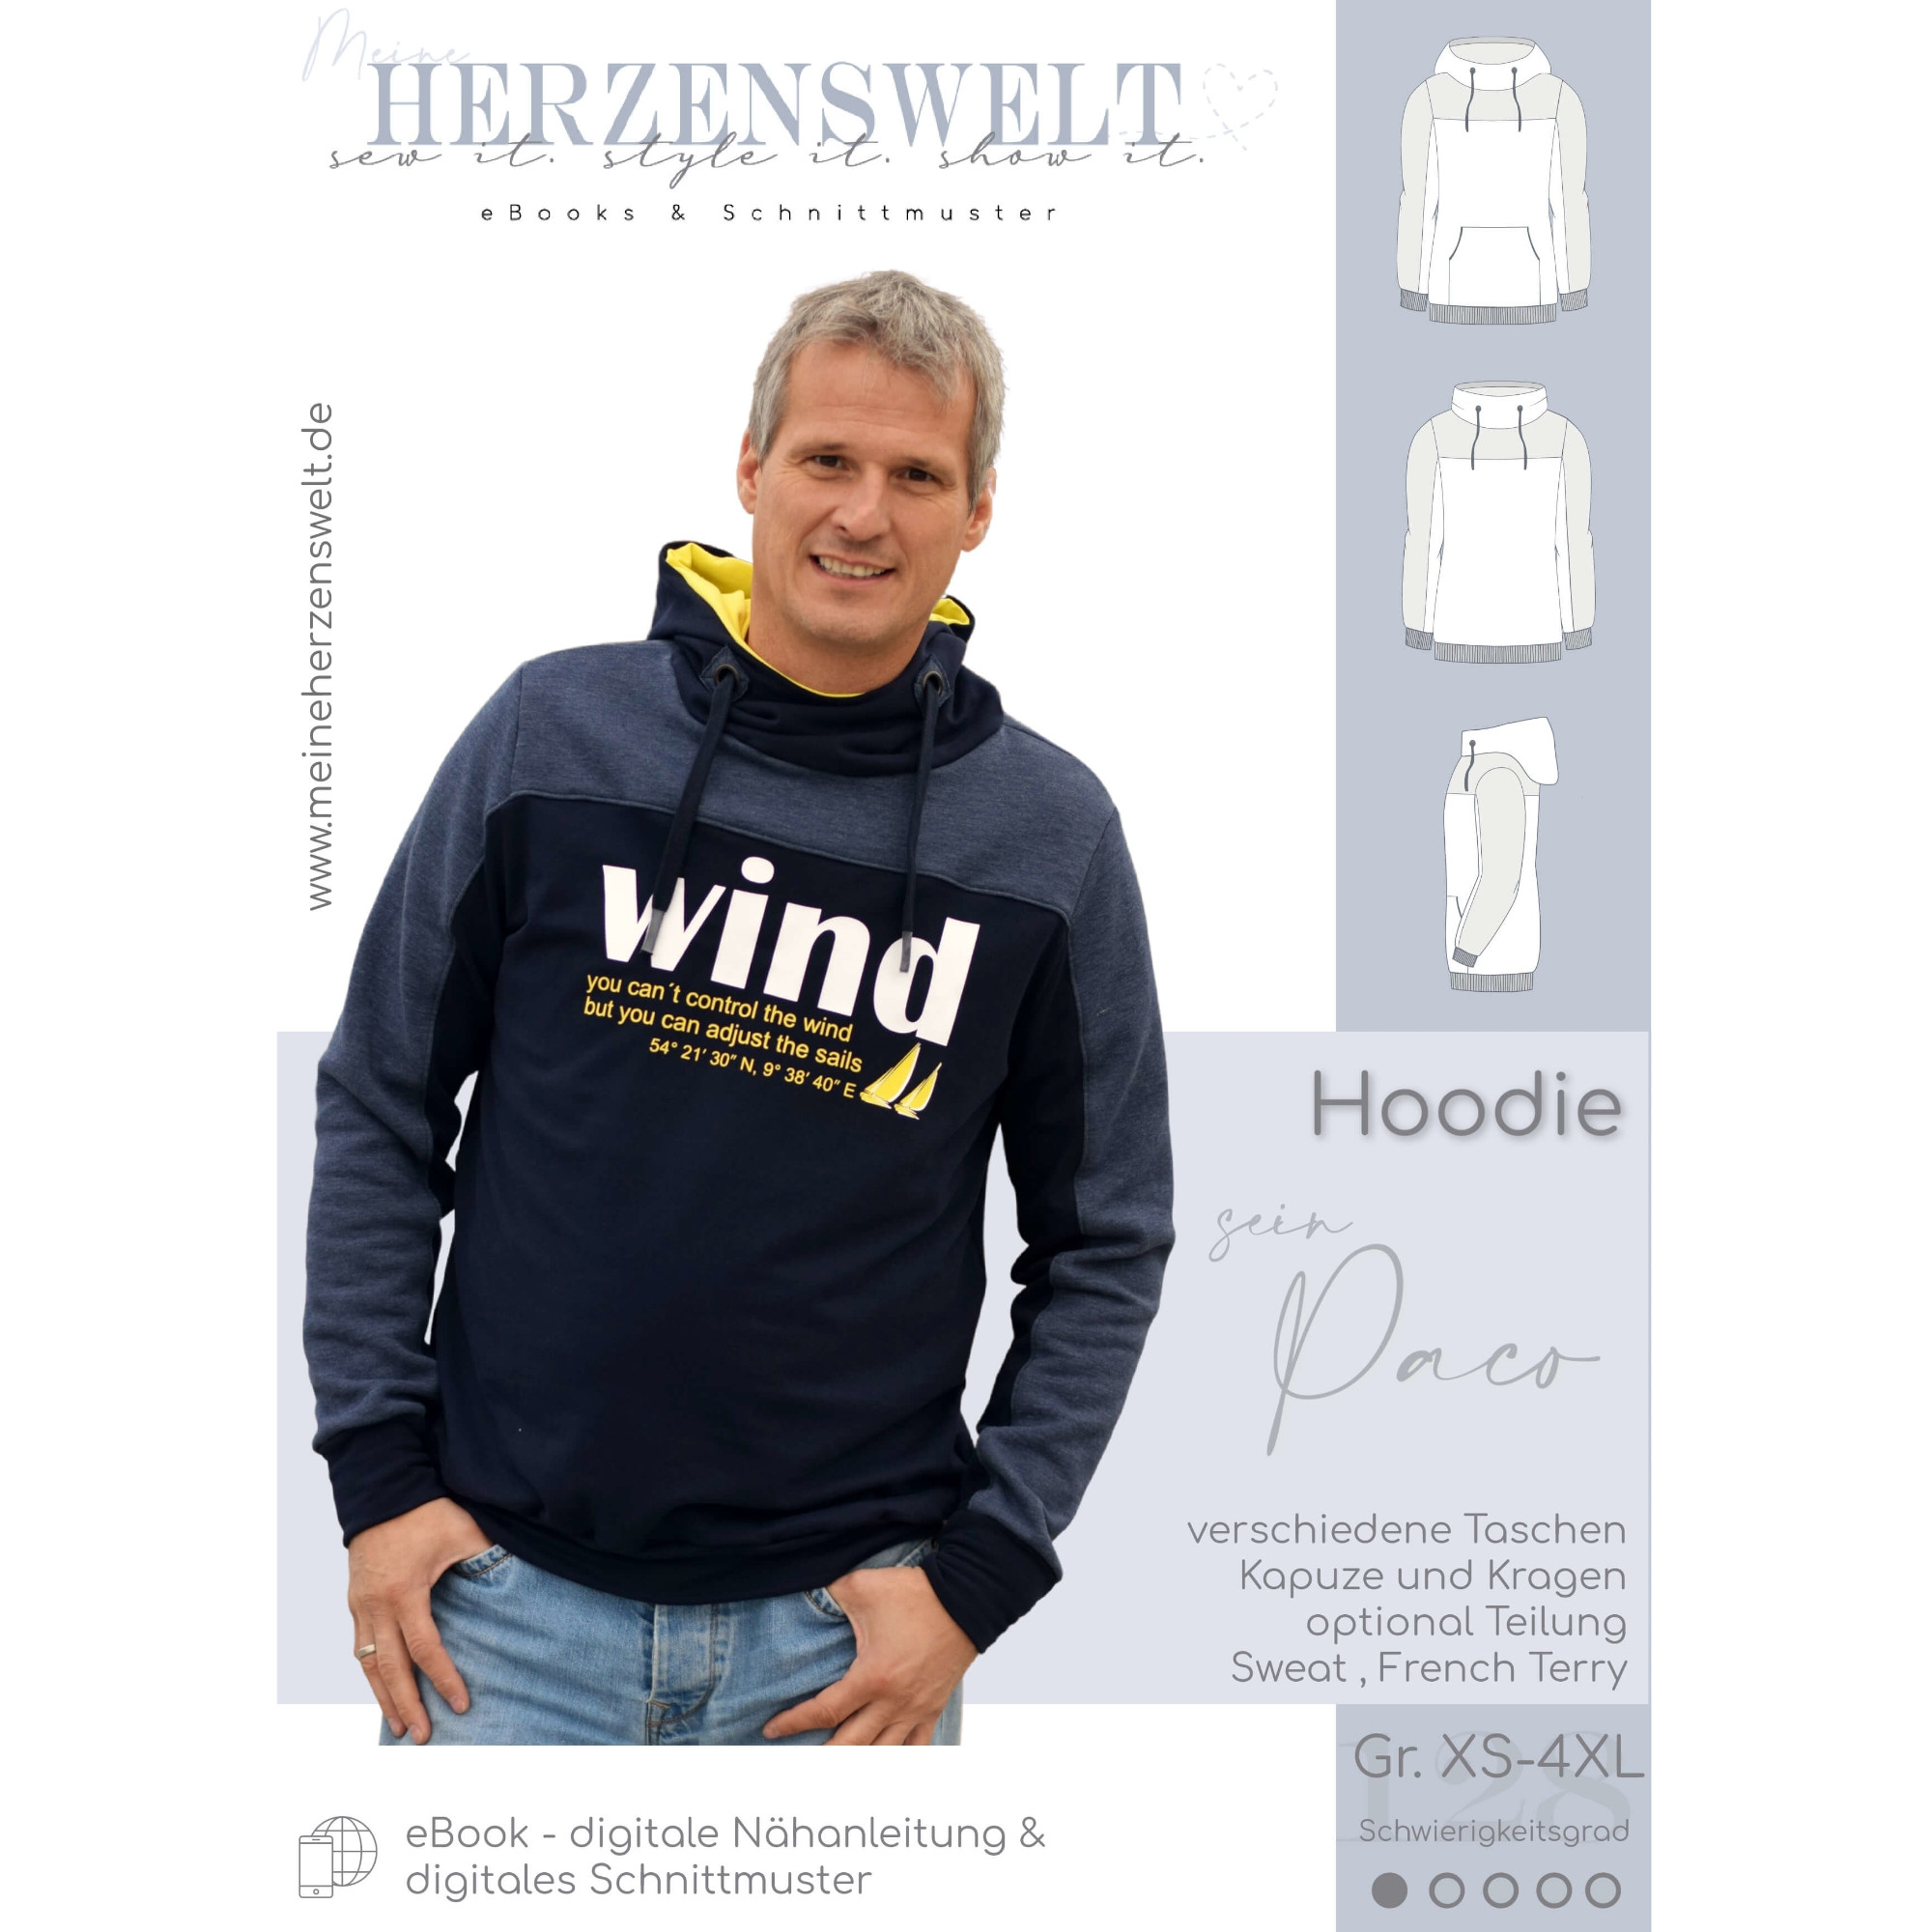 Ellendig samen verwennen E-Book Meine Herzenswelt Hoodie Herren Paco #128, german | Fabrics Hemmers